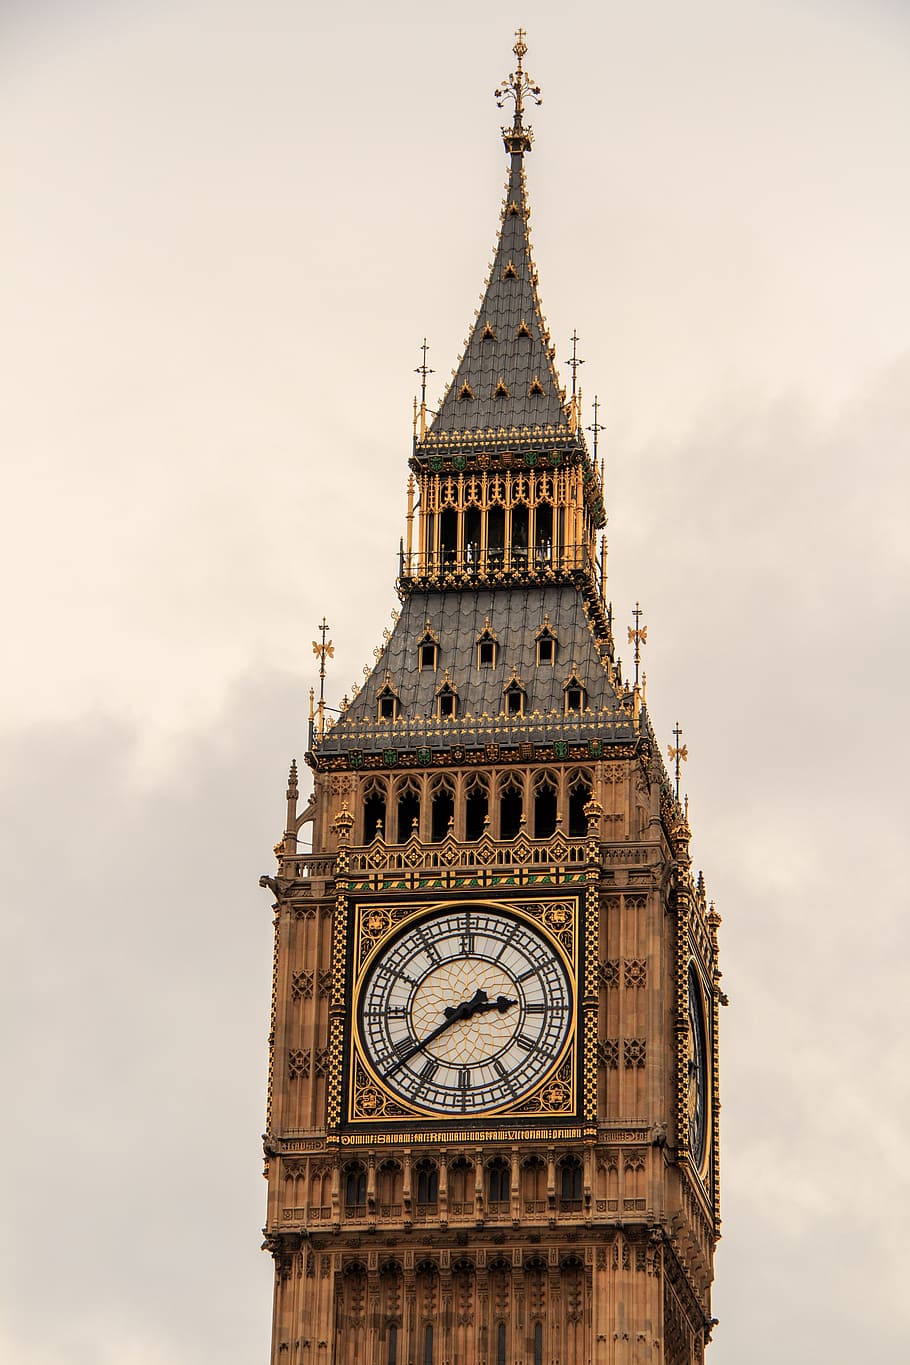 elizabeth tower, london, big ben, clocktower, london, clock tower, tower, time, architecture, built structure, building exterior